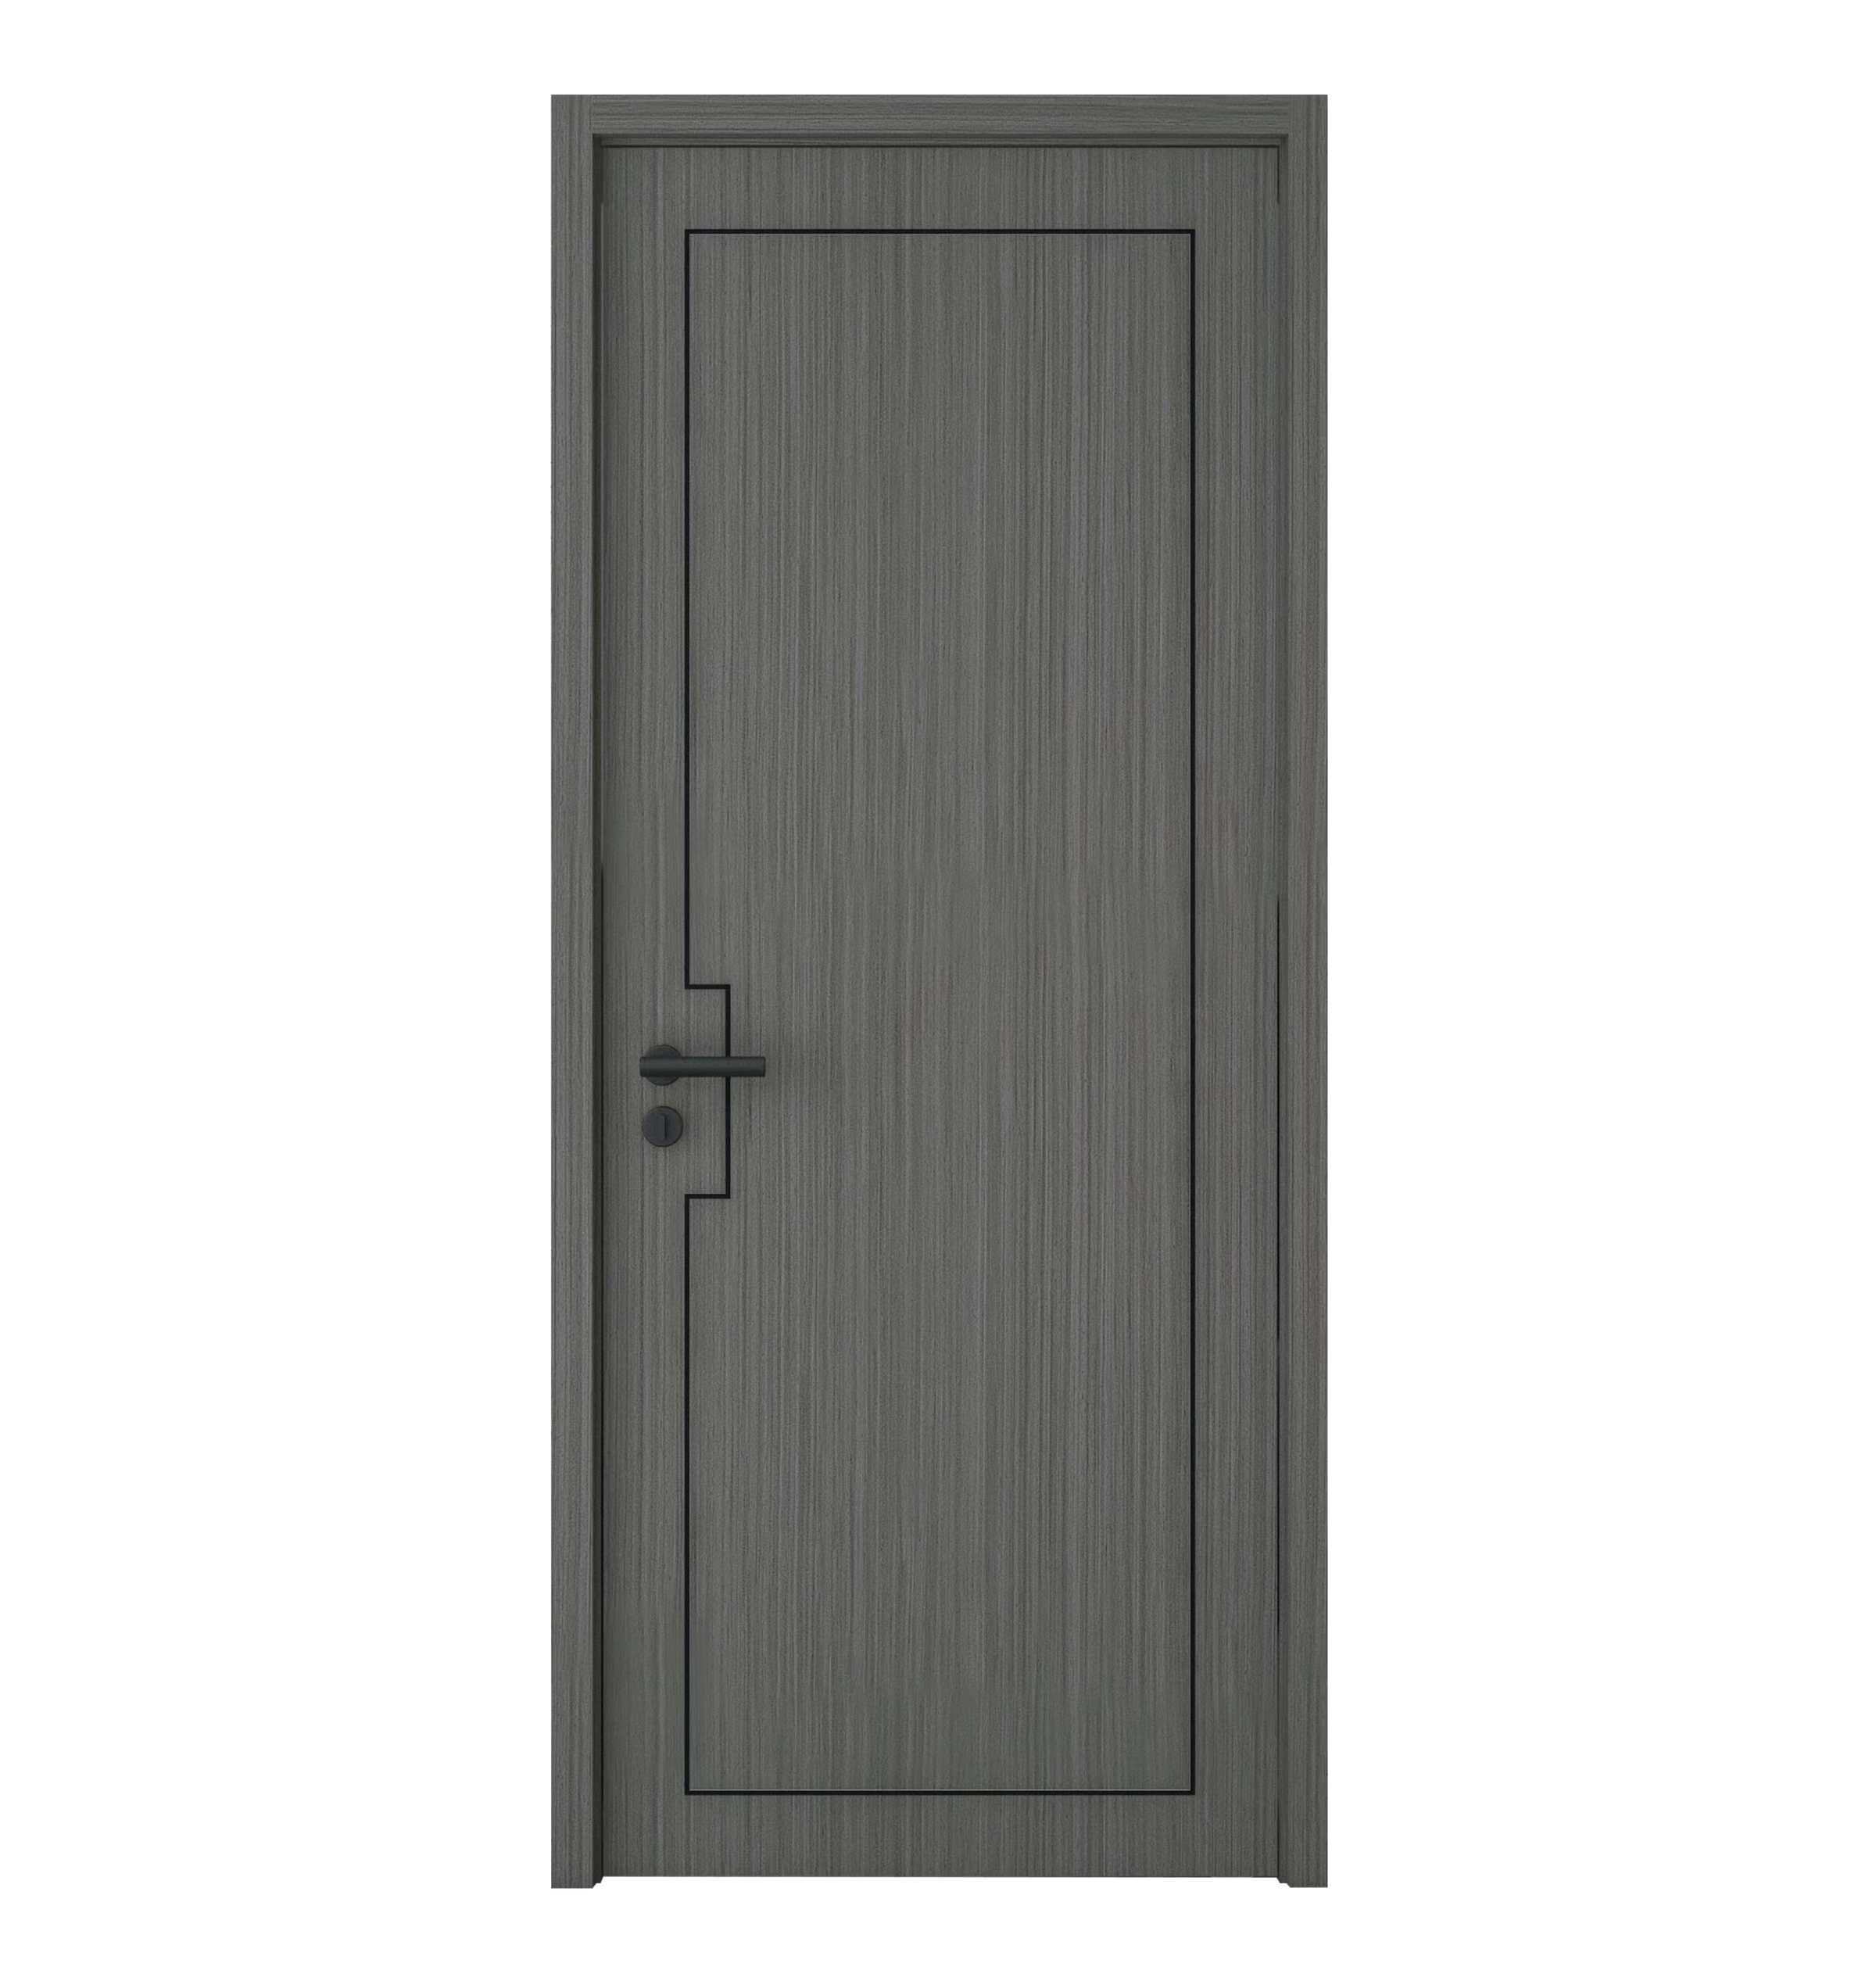 Simple Superior Quality Luxury Design Bathroom Entry Wooden PVC Finish Door ﻿